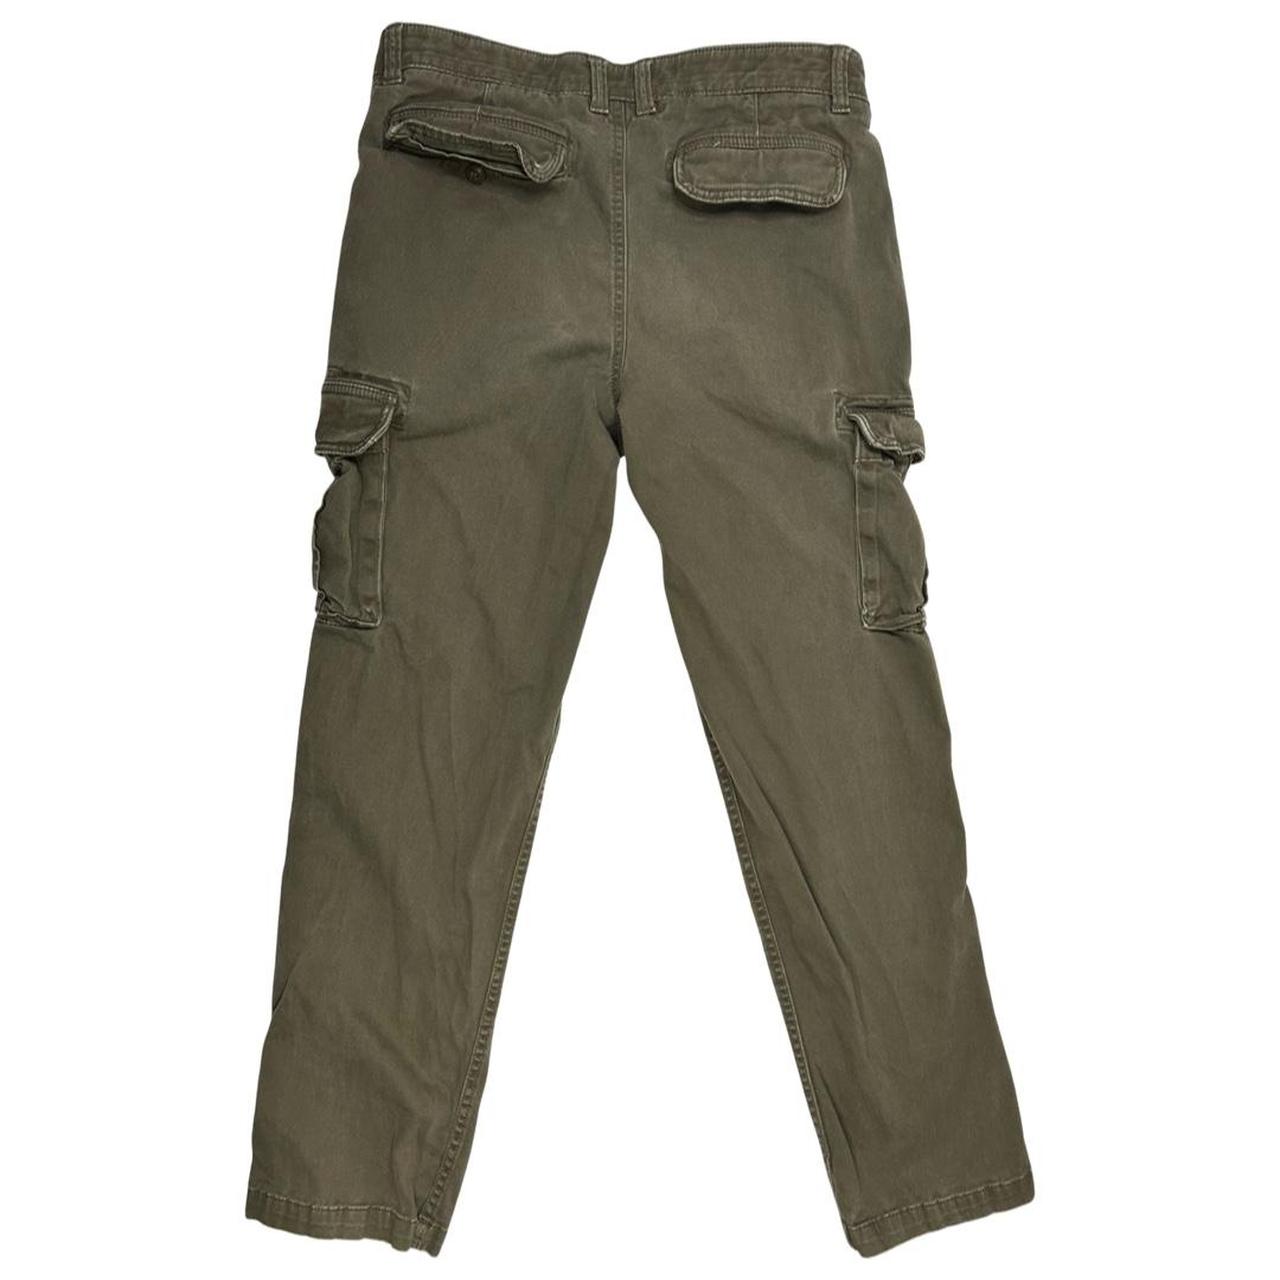 Sonoma Goods for Life Men's Green and Khaki Trousers | Depop